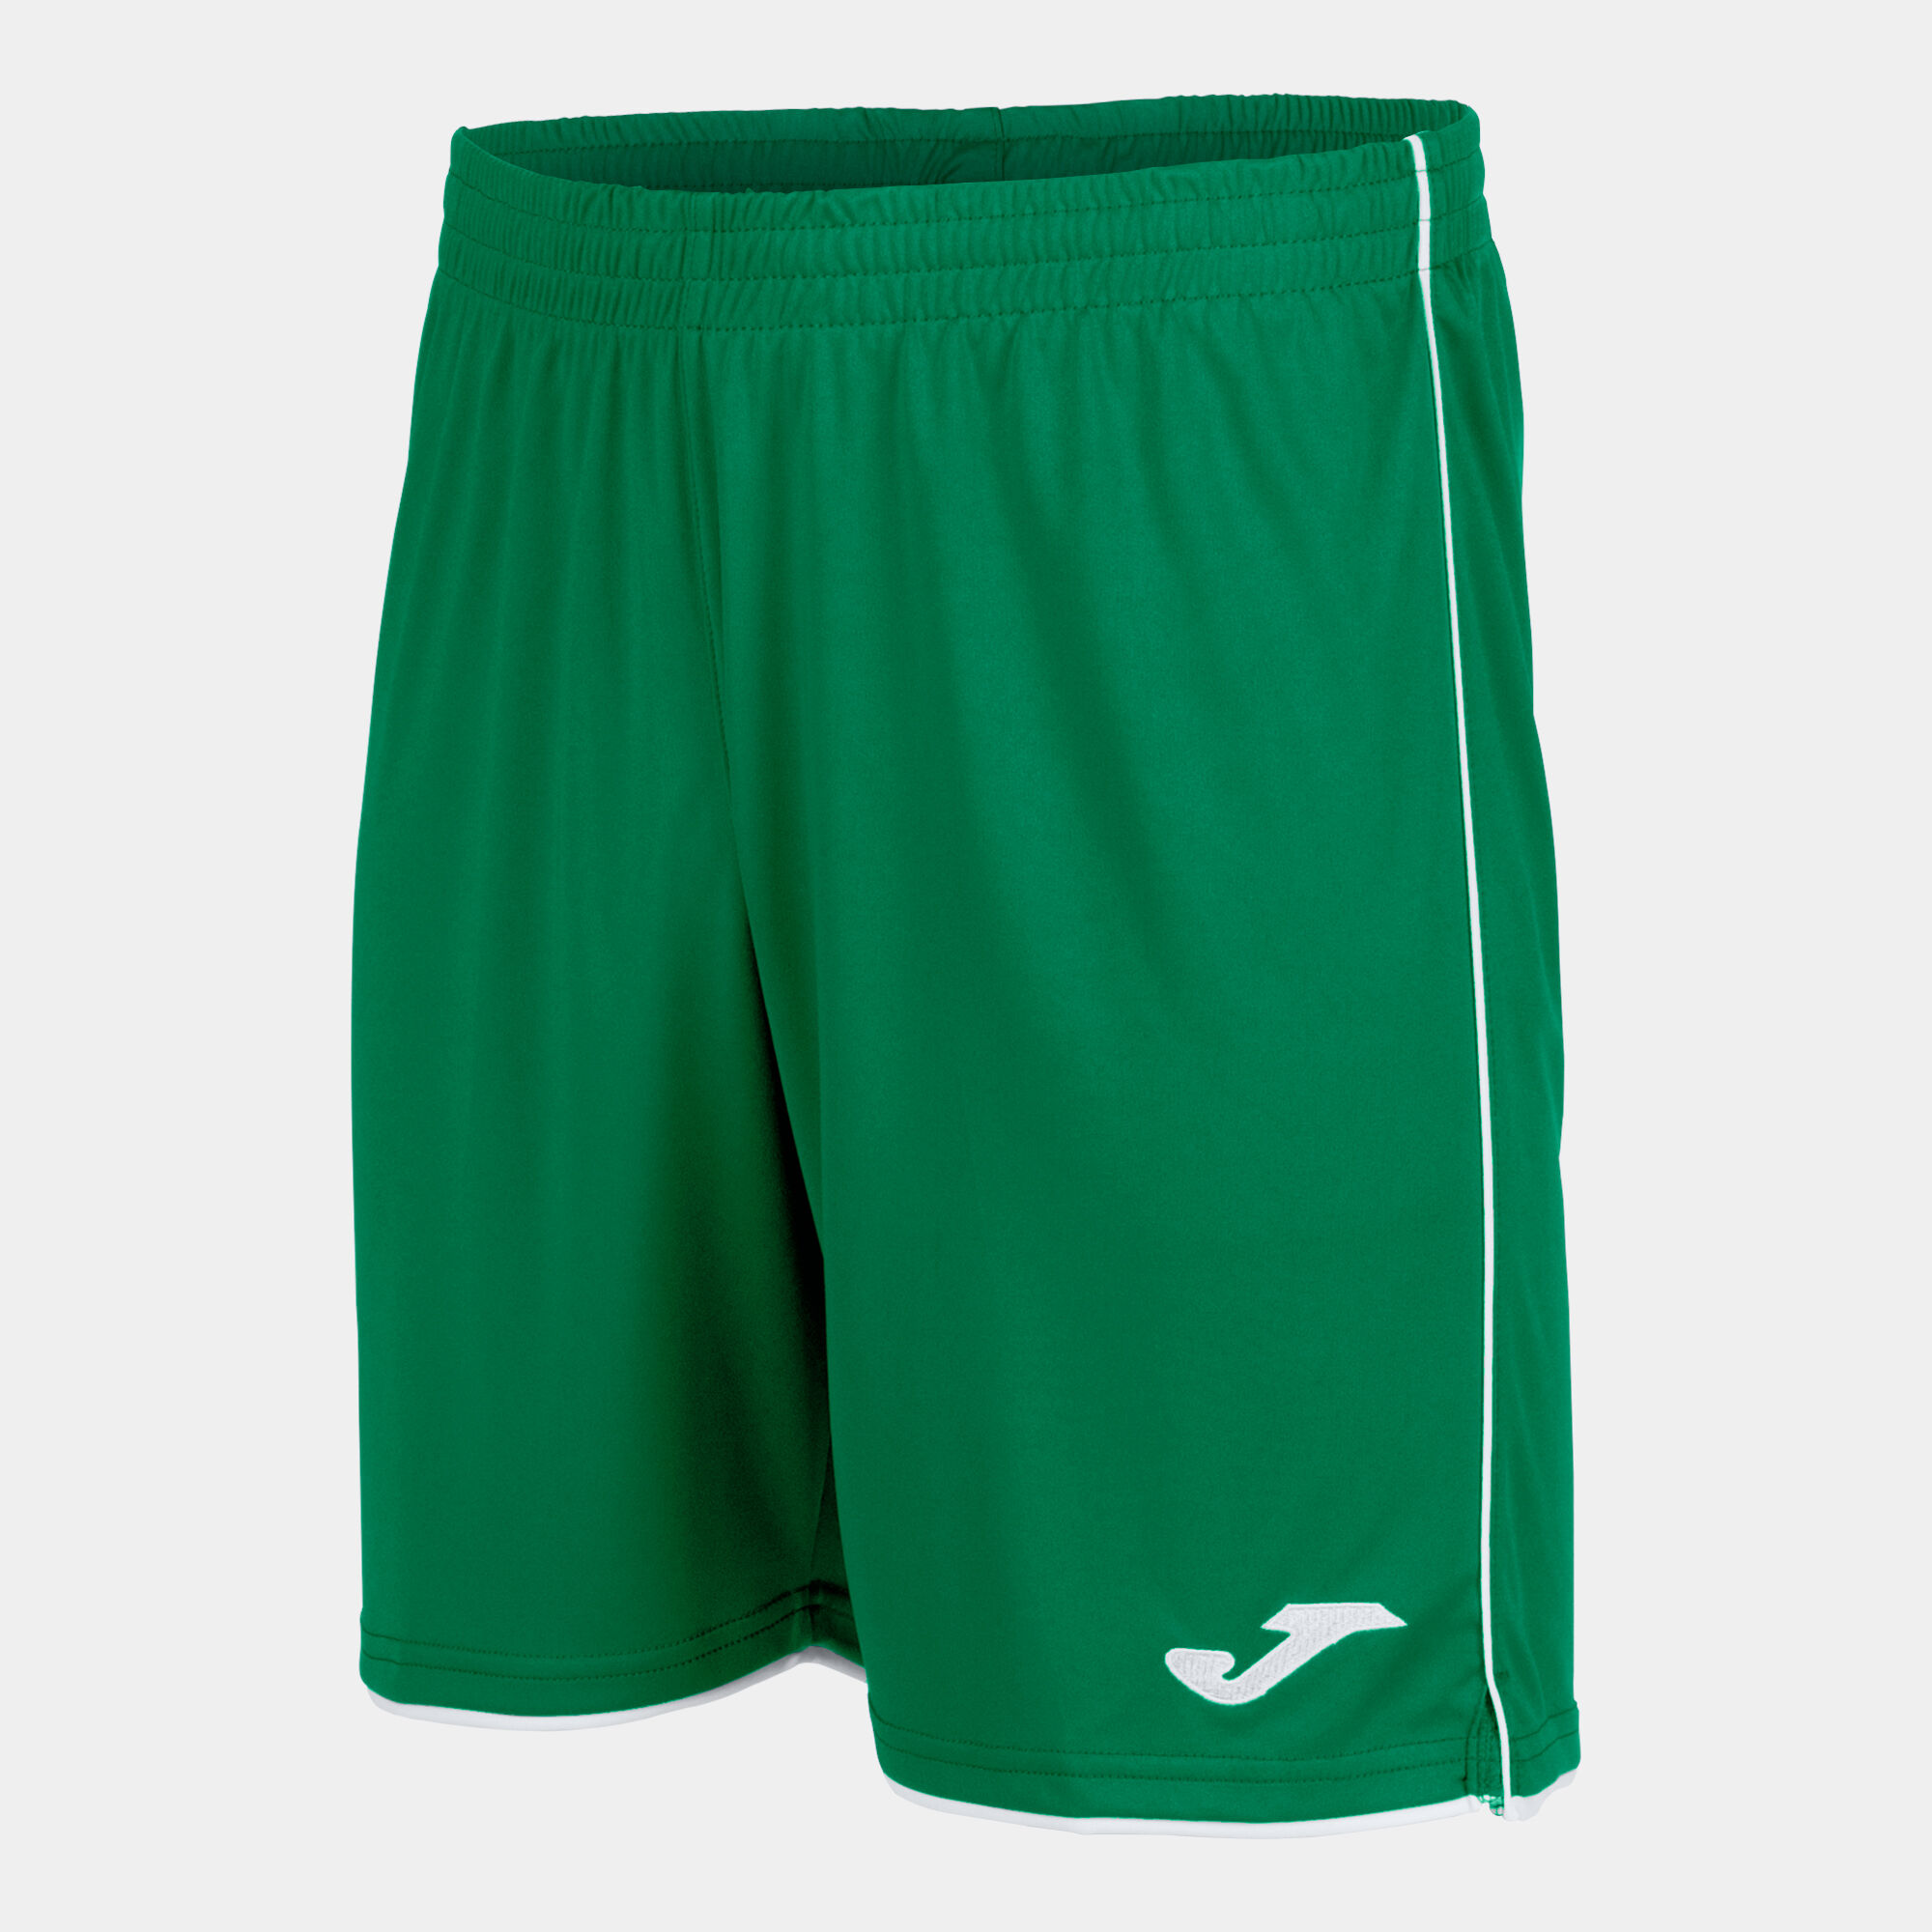 Shorts man Liga green white